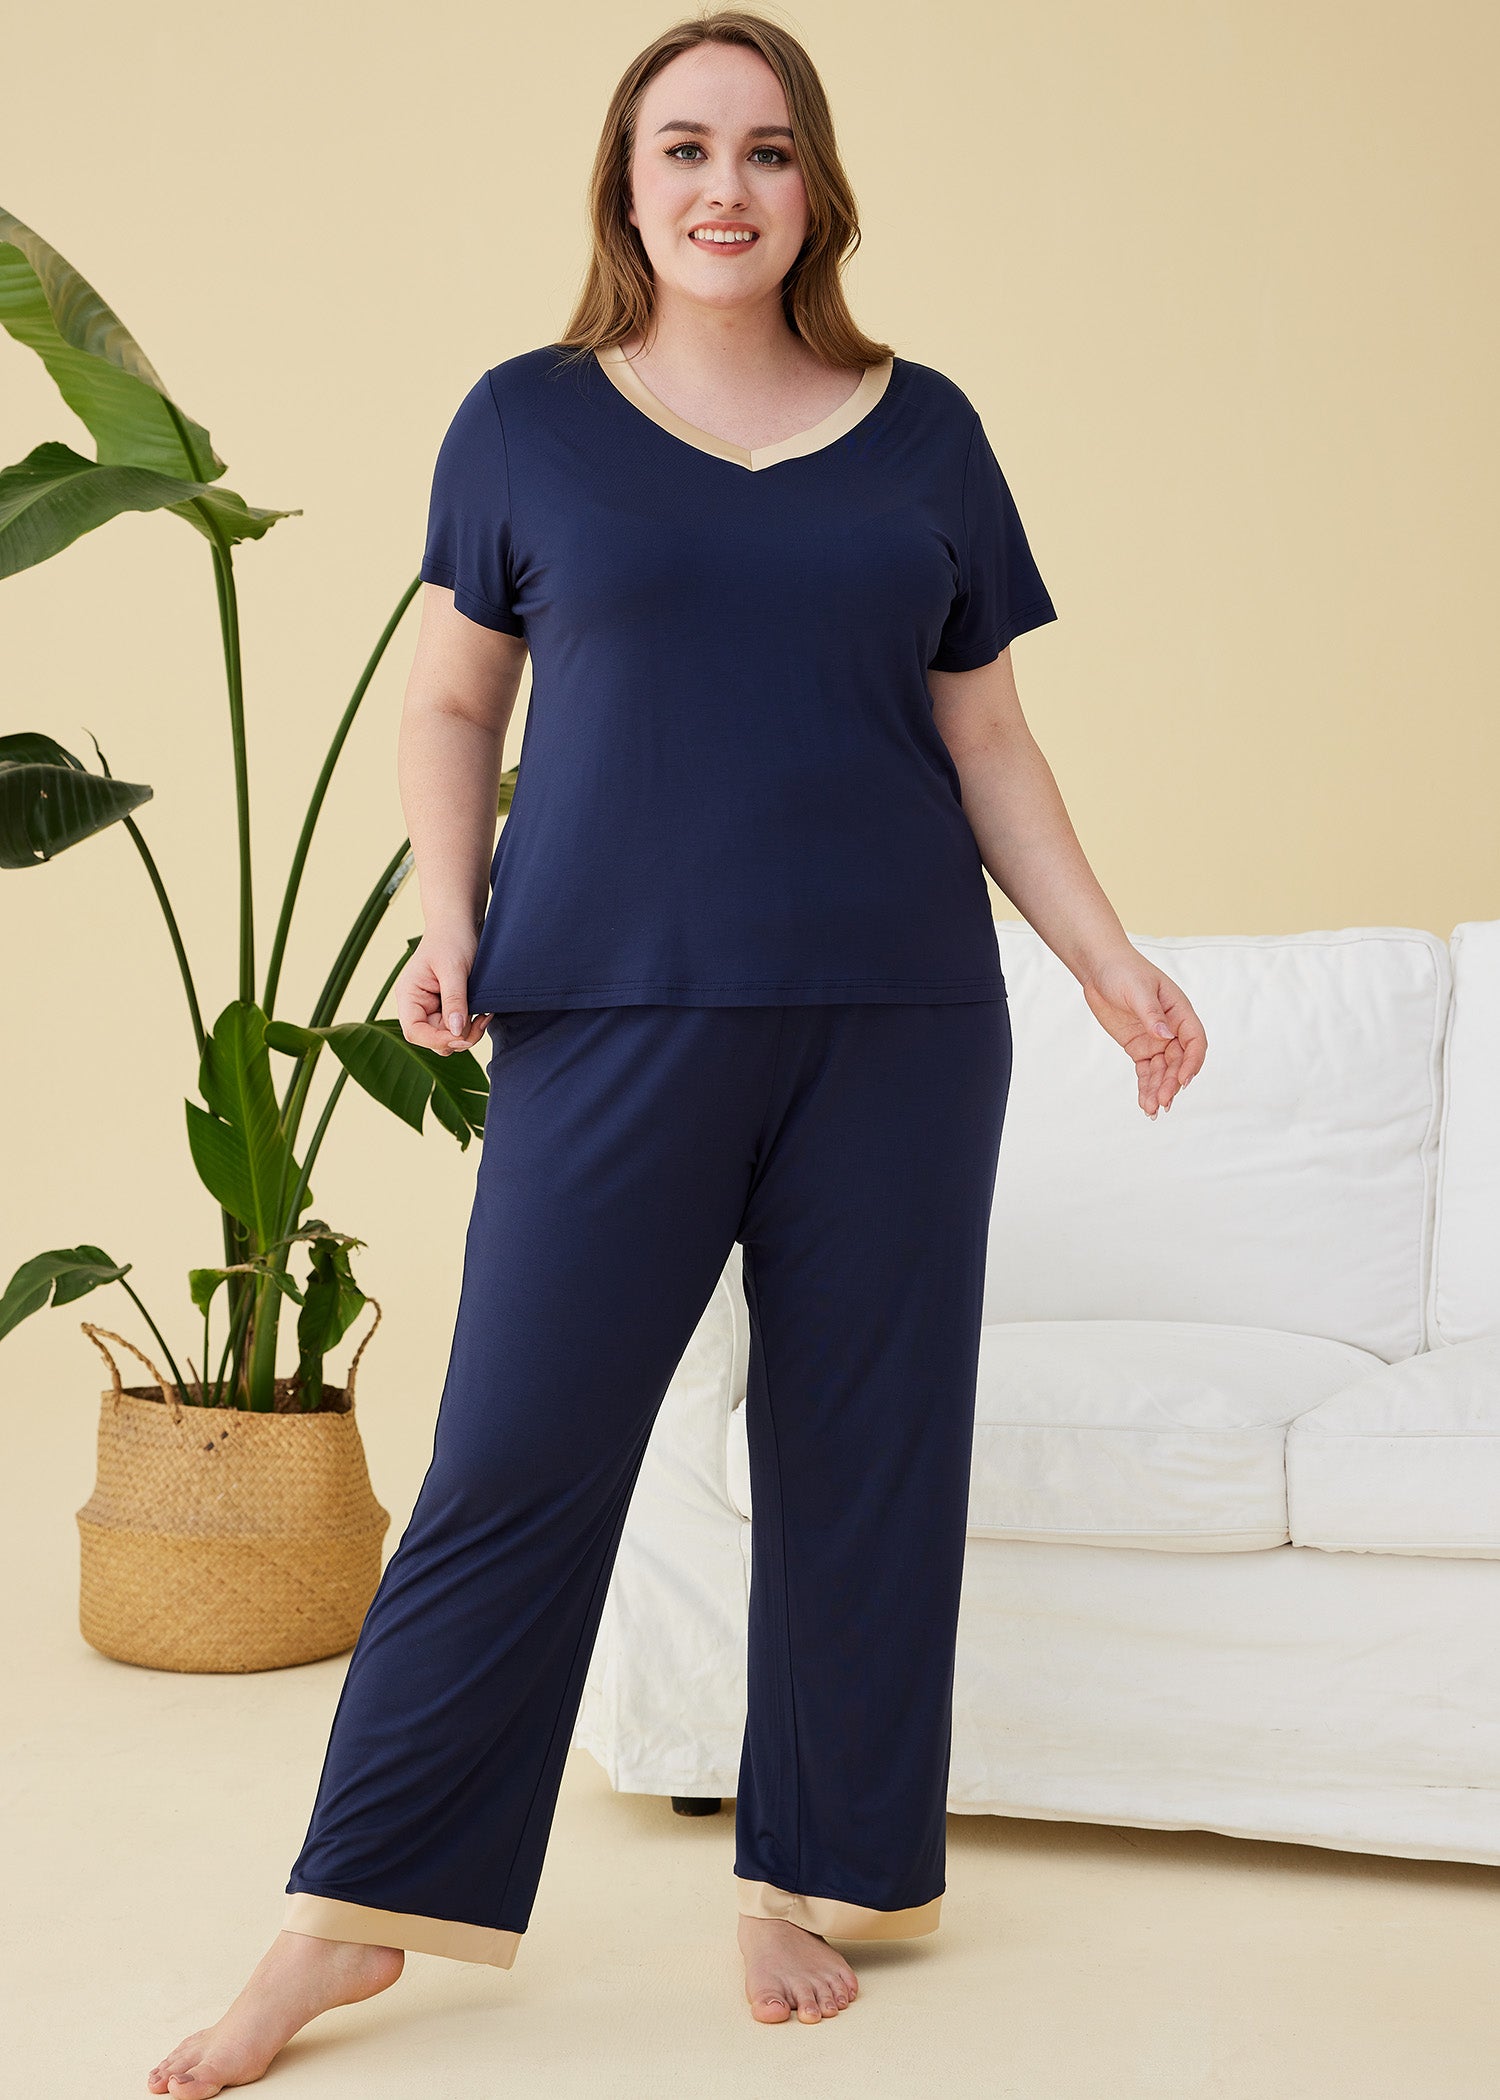 cafe Medic levering Women's V-Neck Sleepwear Short Sleeves Top with Pants Pajama Set – Latuza